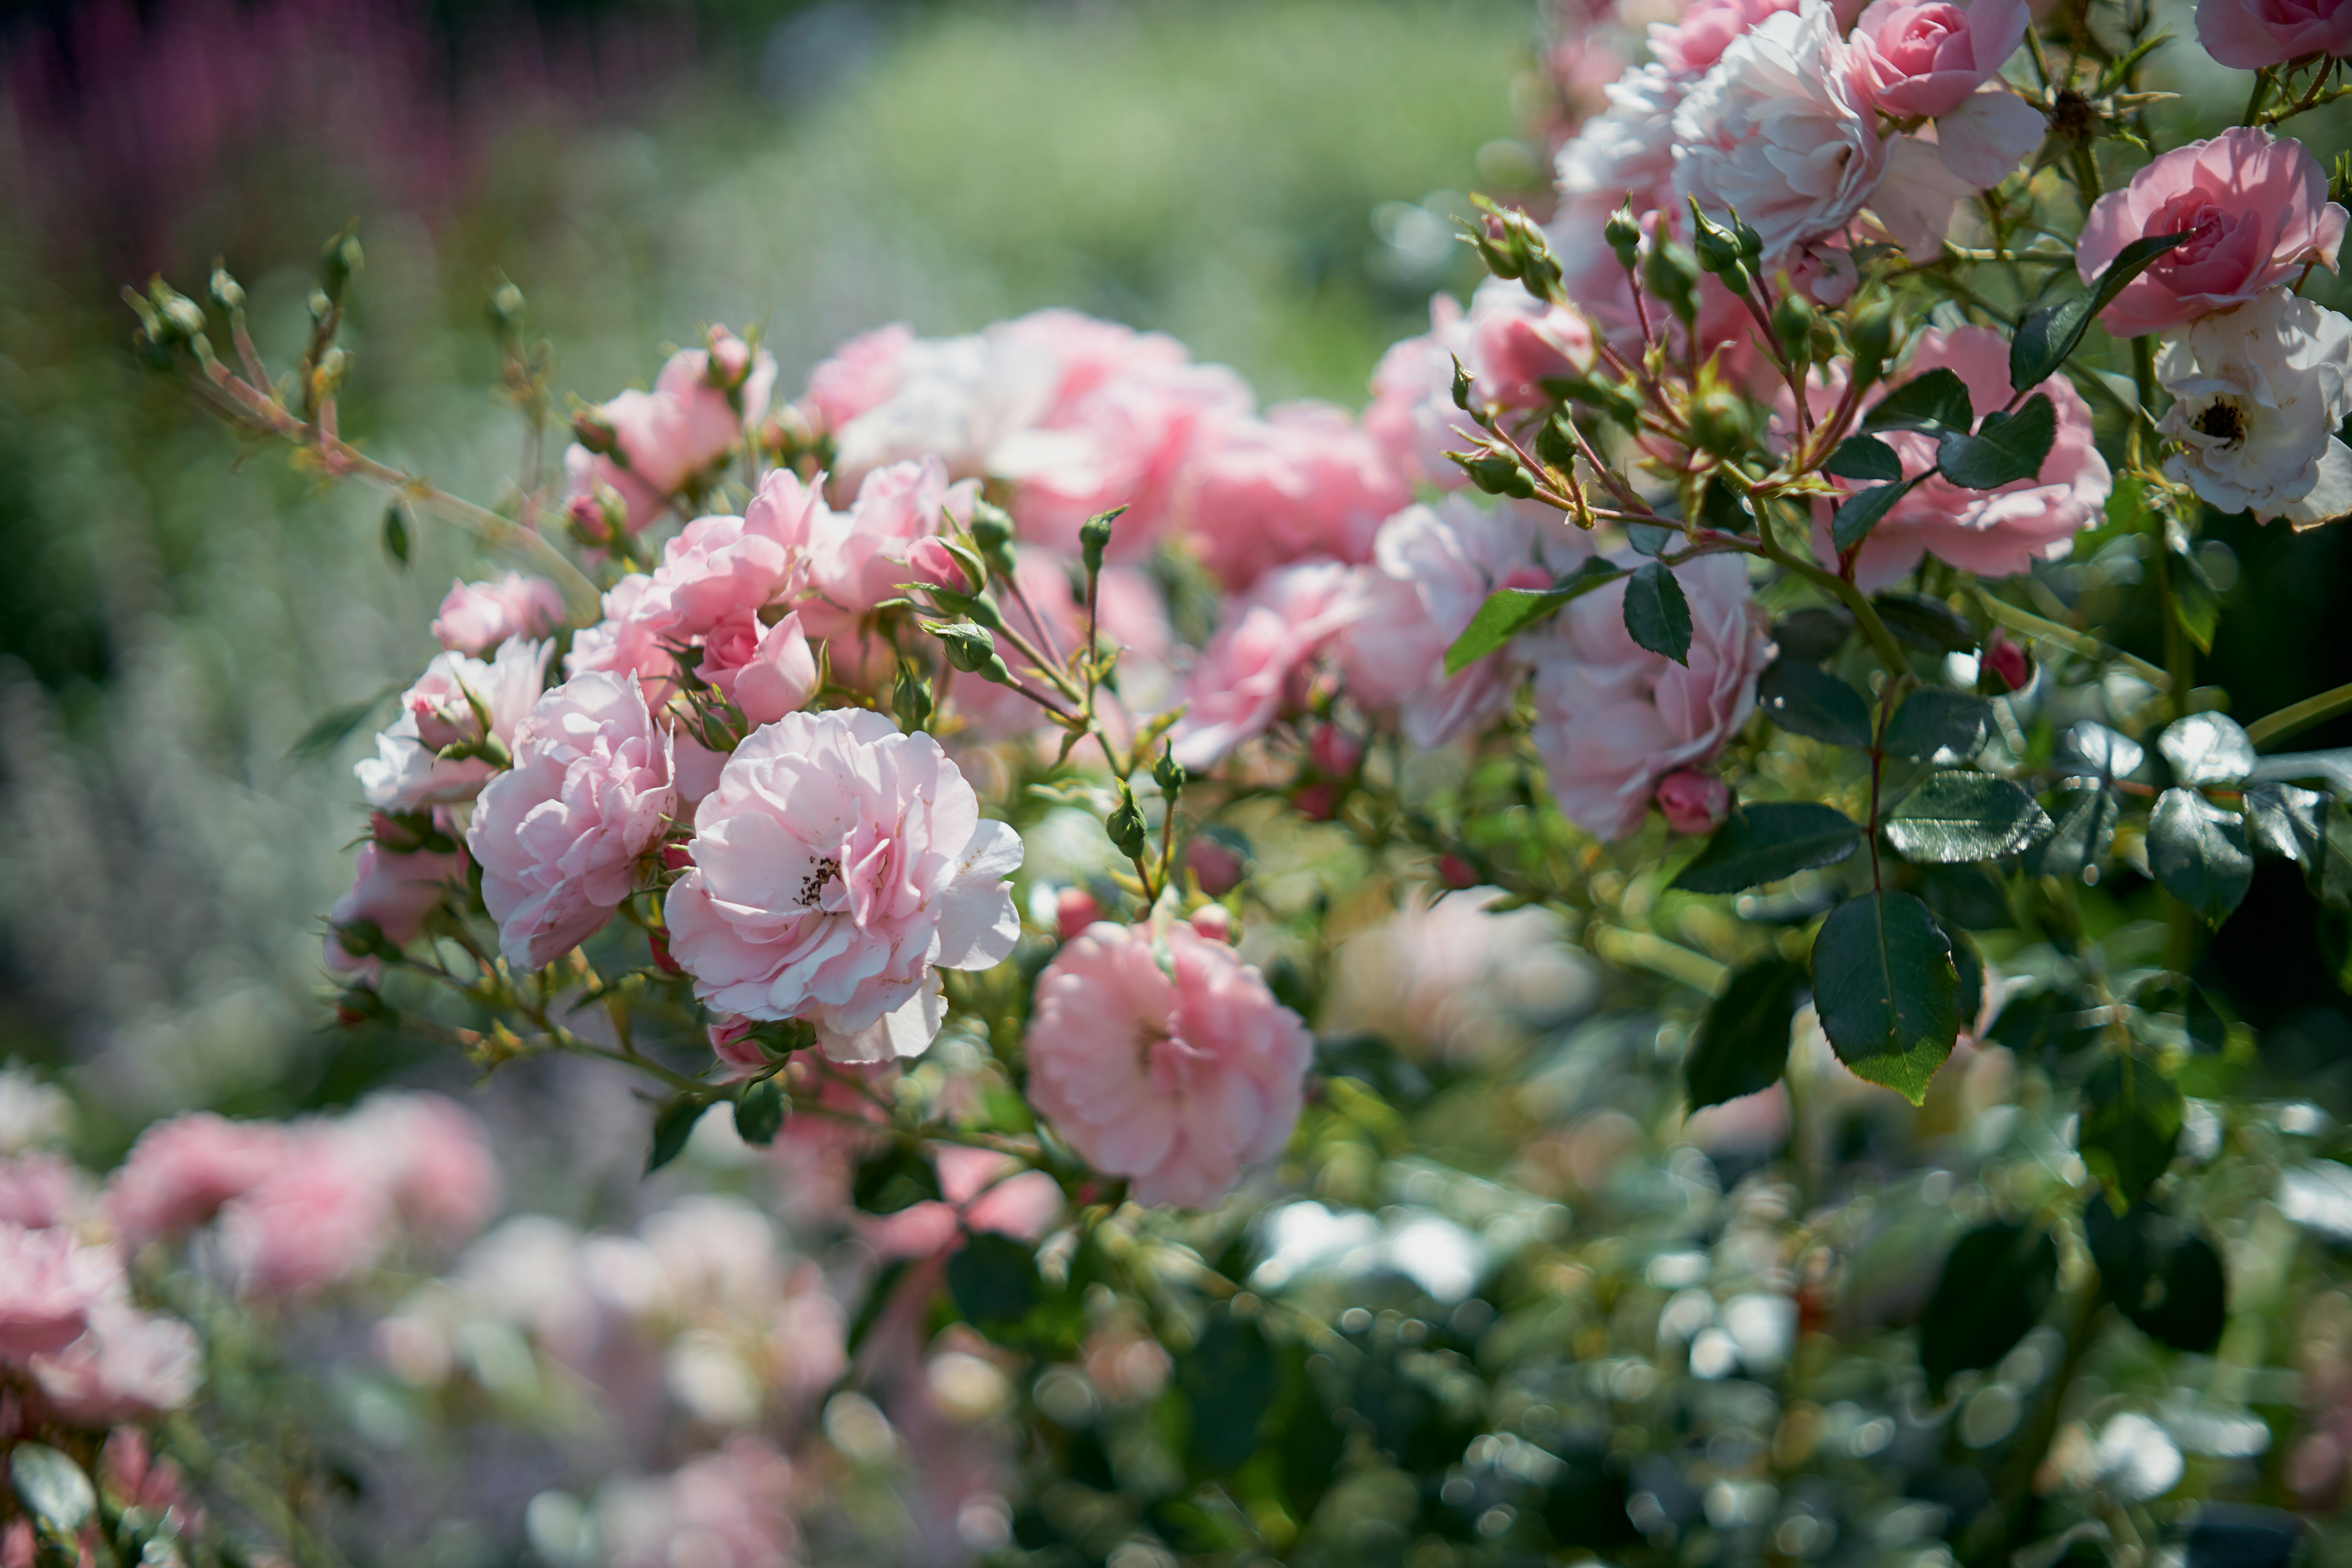 Defocused background of summer garden flowers. Roses. Close up, blurred.